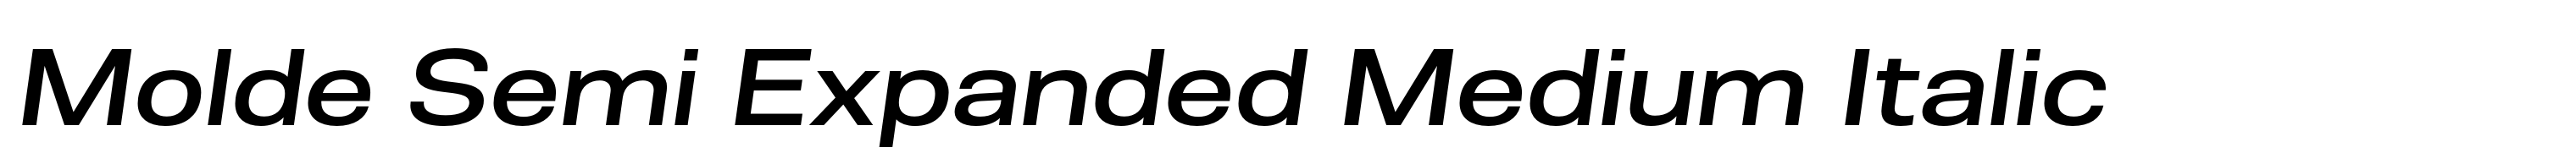 Molde Semi Expanded Medium Italic